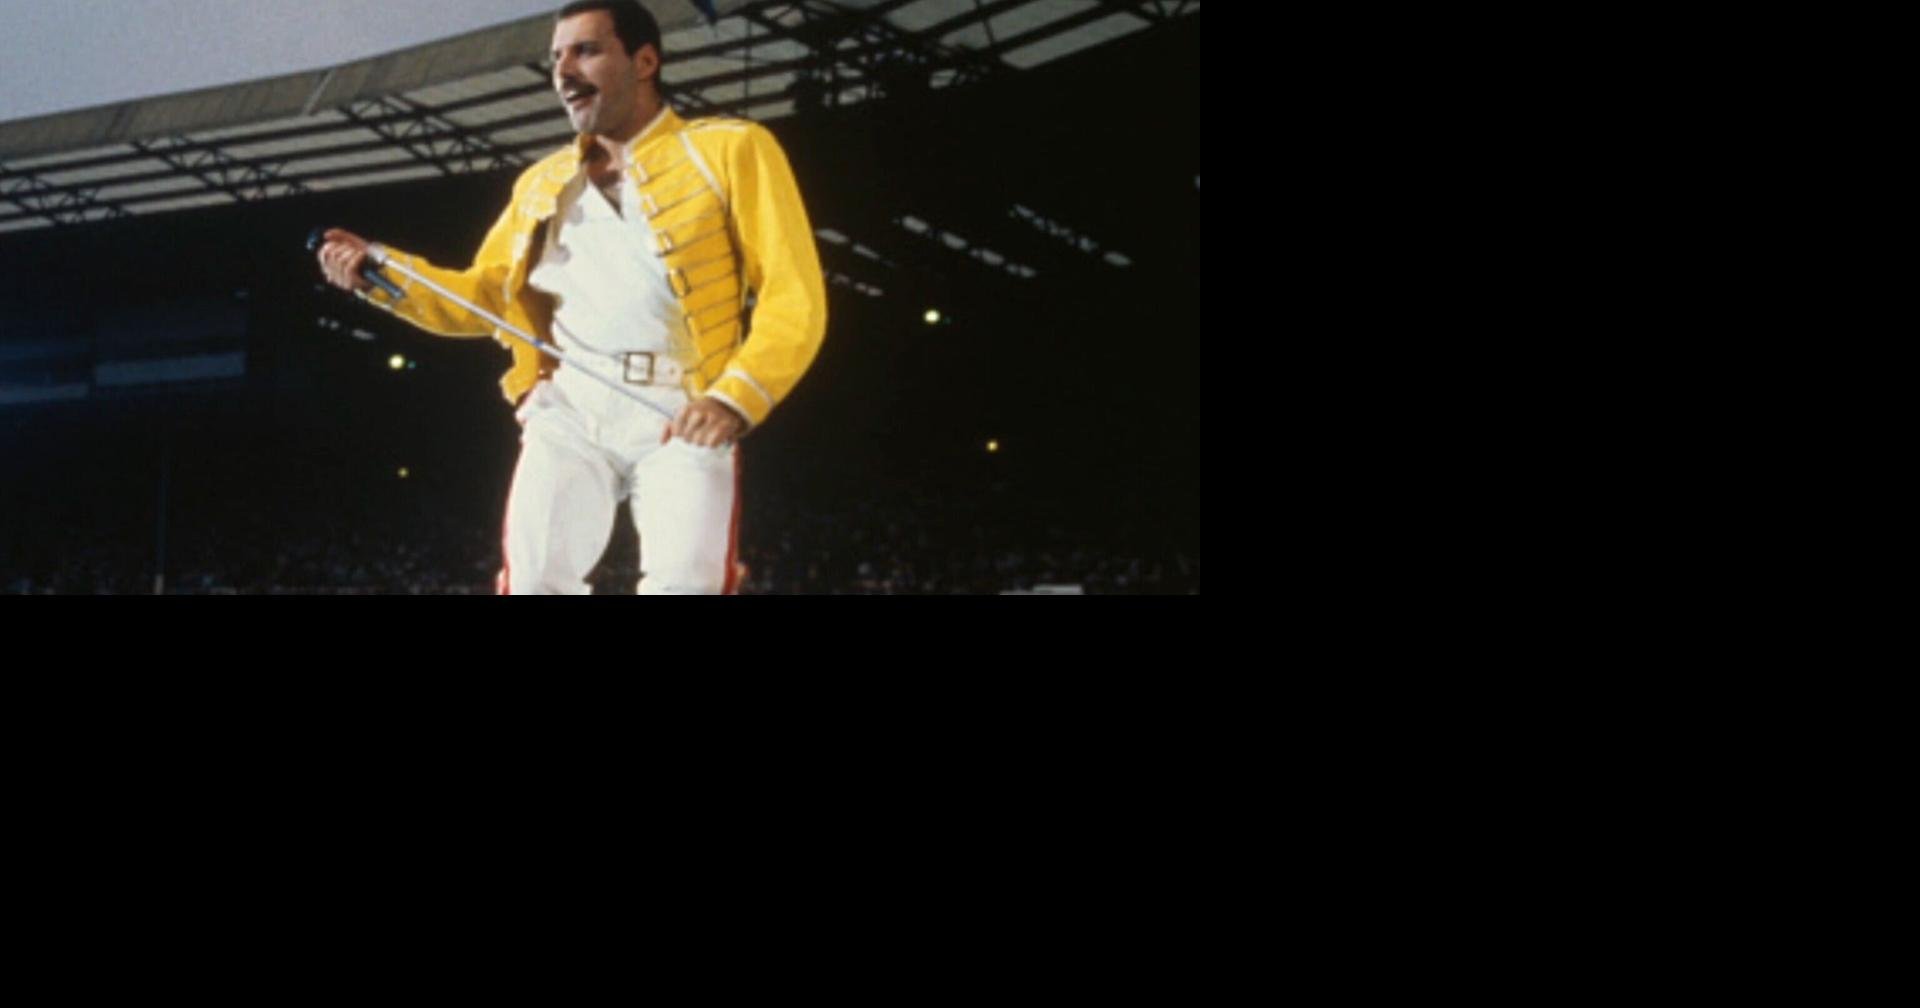 Queen to debut unreleased song featuring Freddie Mercury